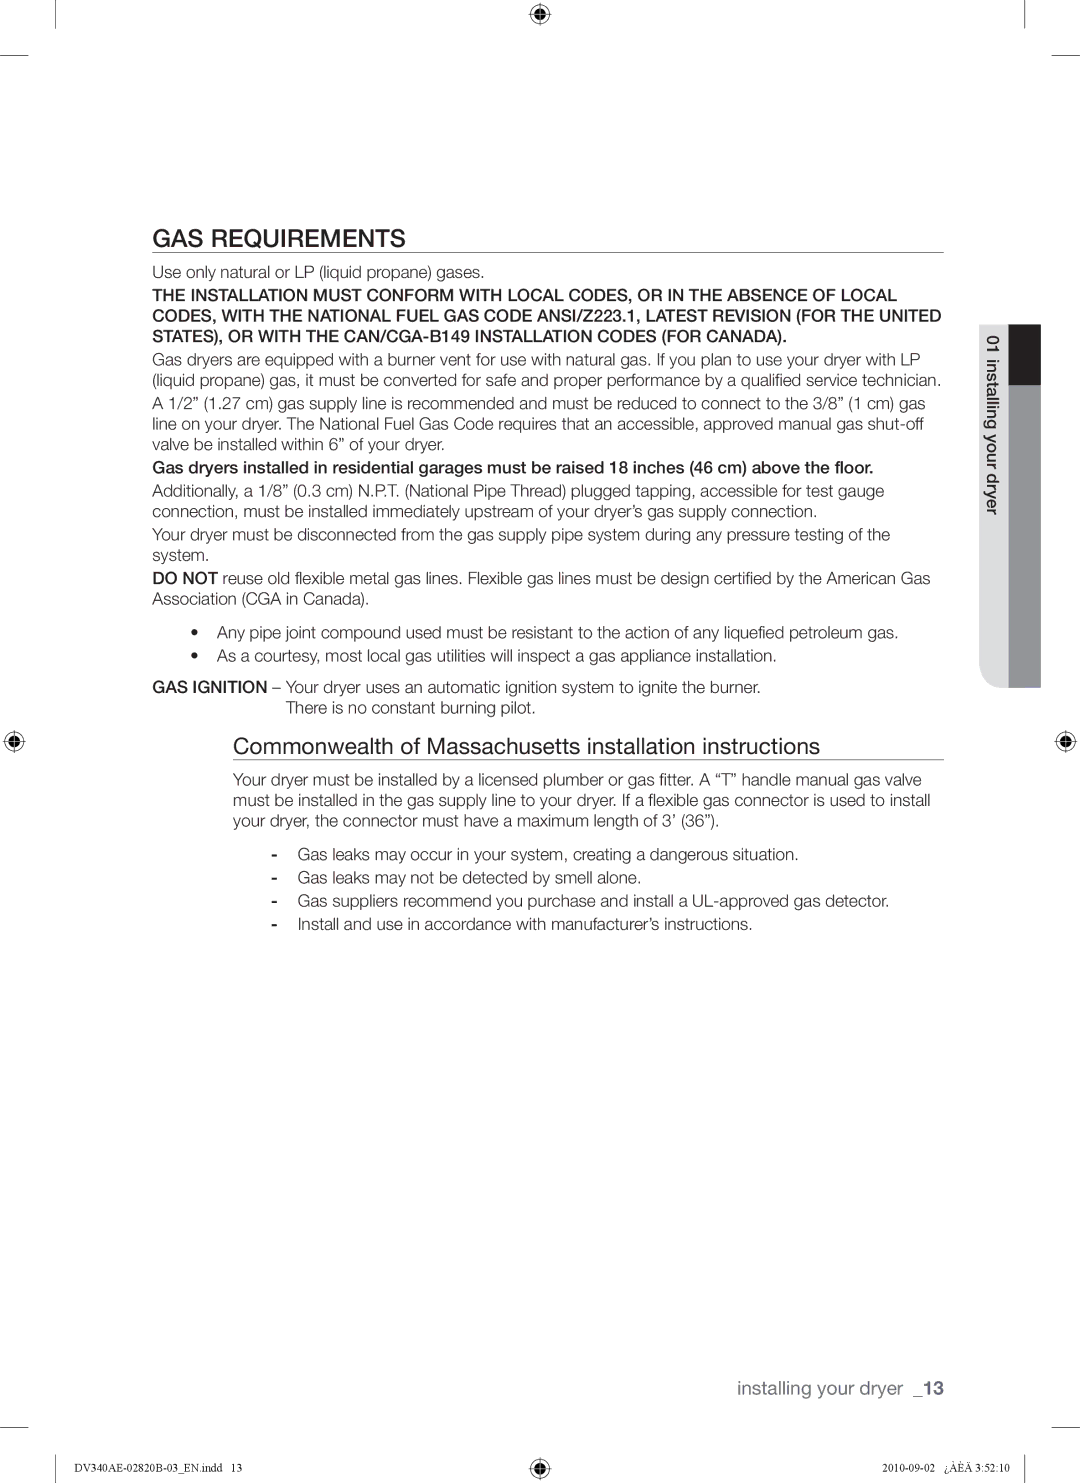 Samsung DV340AEW, DV330AEW user manual GAS Requirements, Commonwealth of Massachusetts installation instructions 